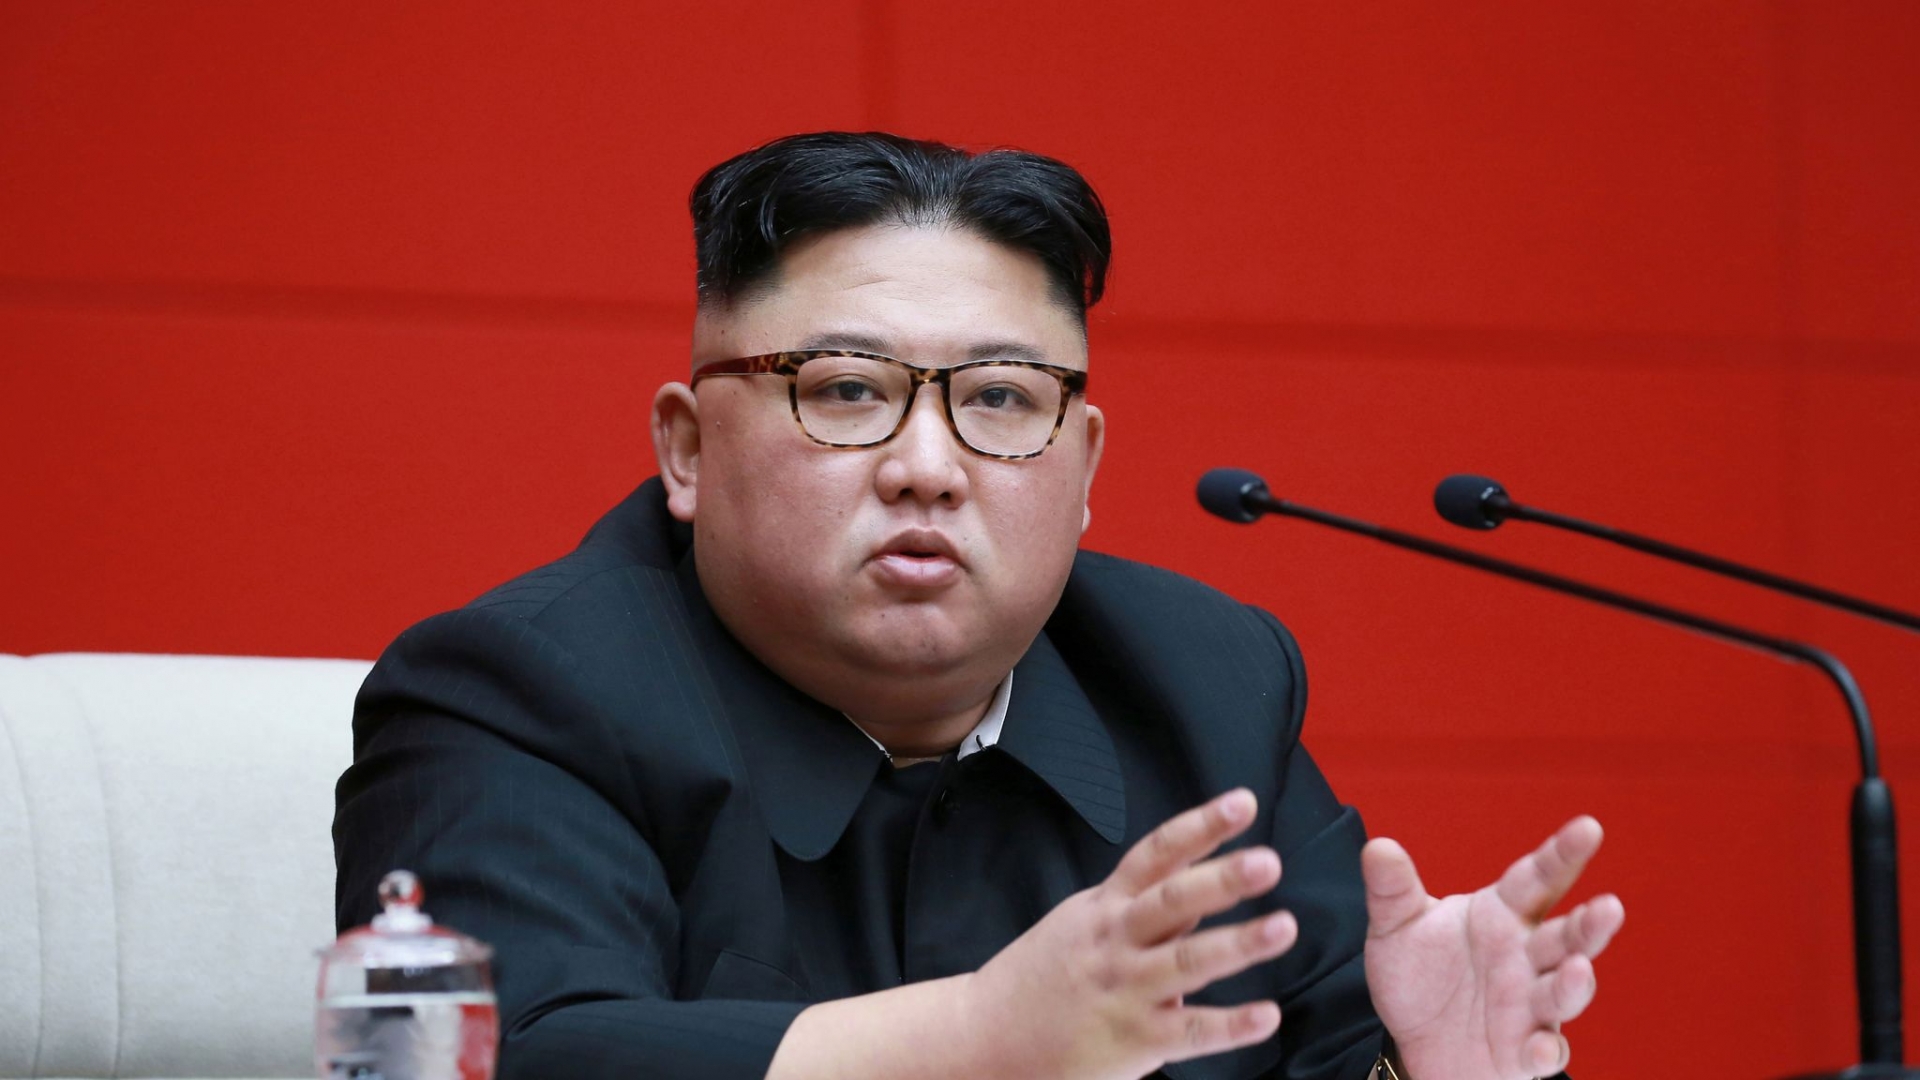 Latest news leader Kim Jong Un's health condition